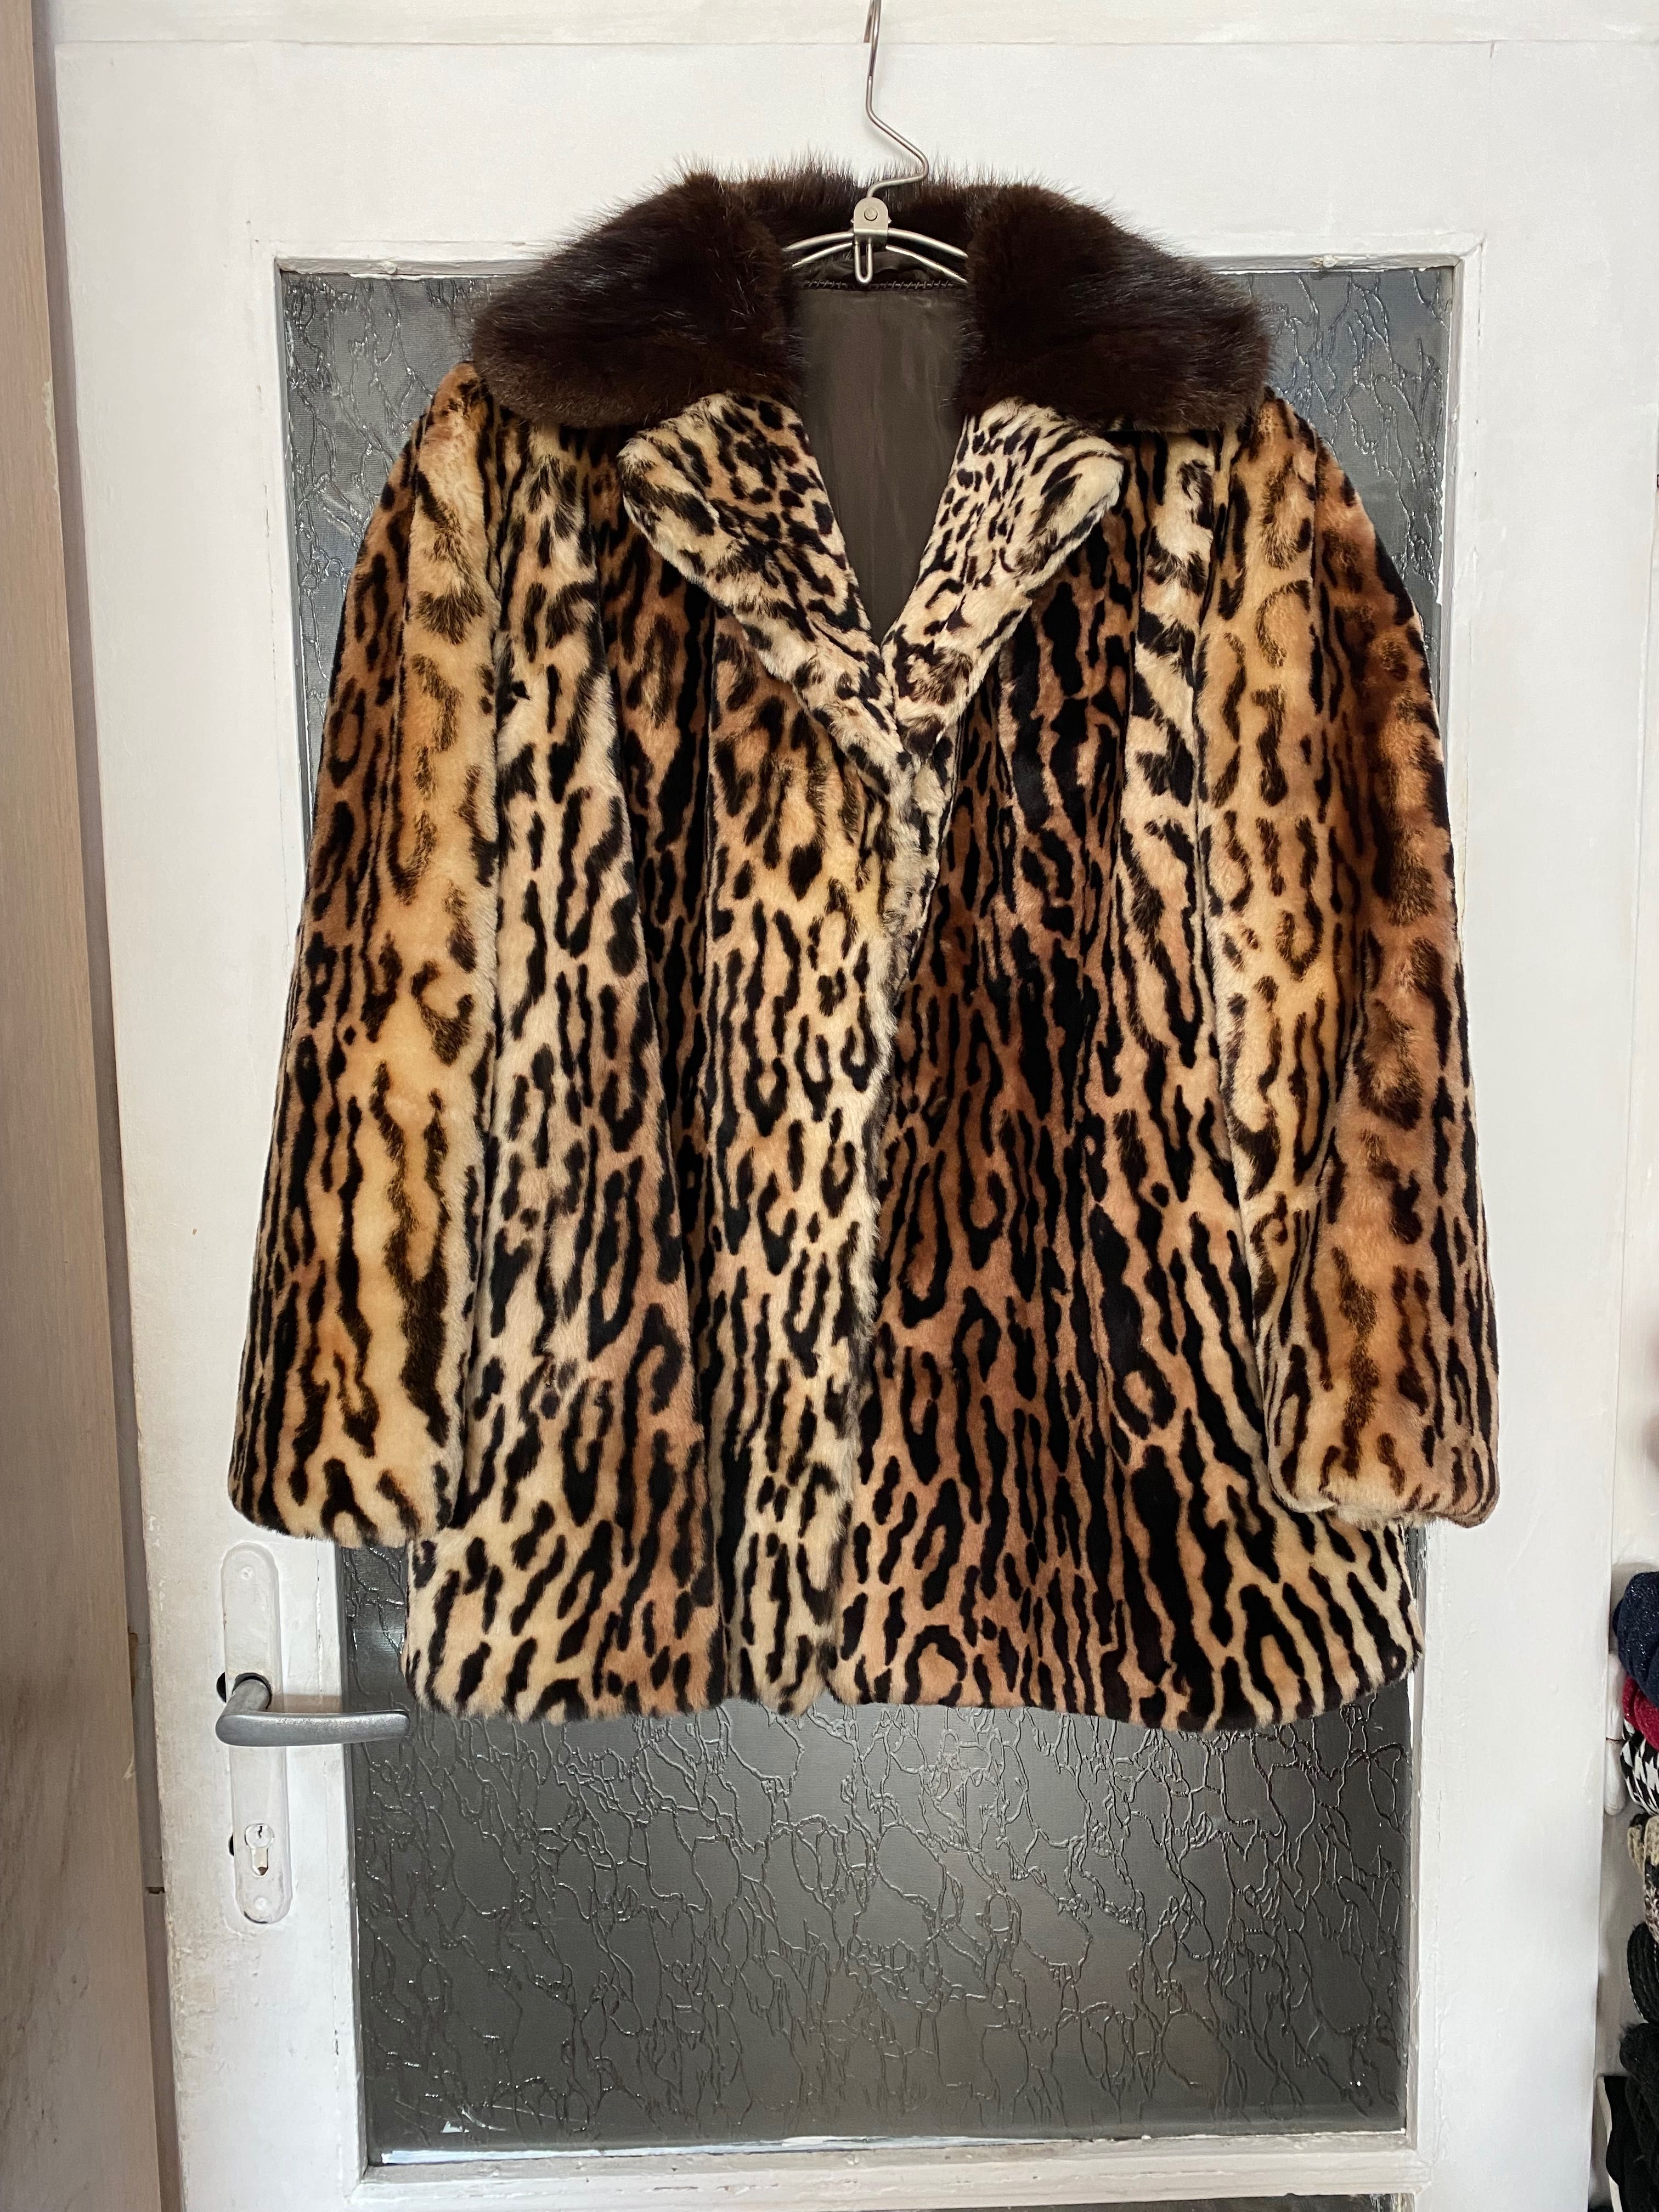 Луксозно тигрово немско палто от естествена кожа Pelz-Papas